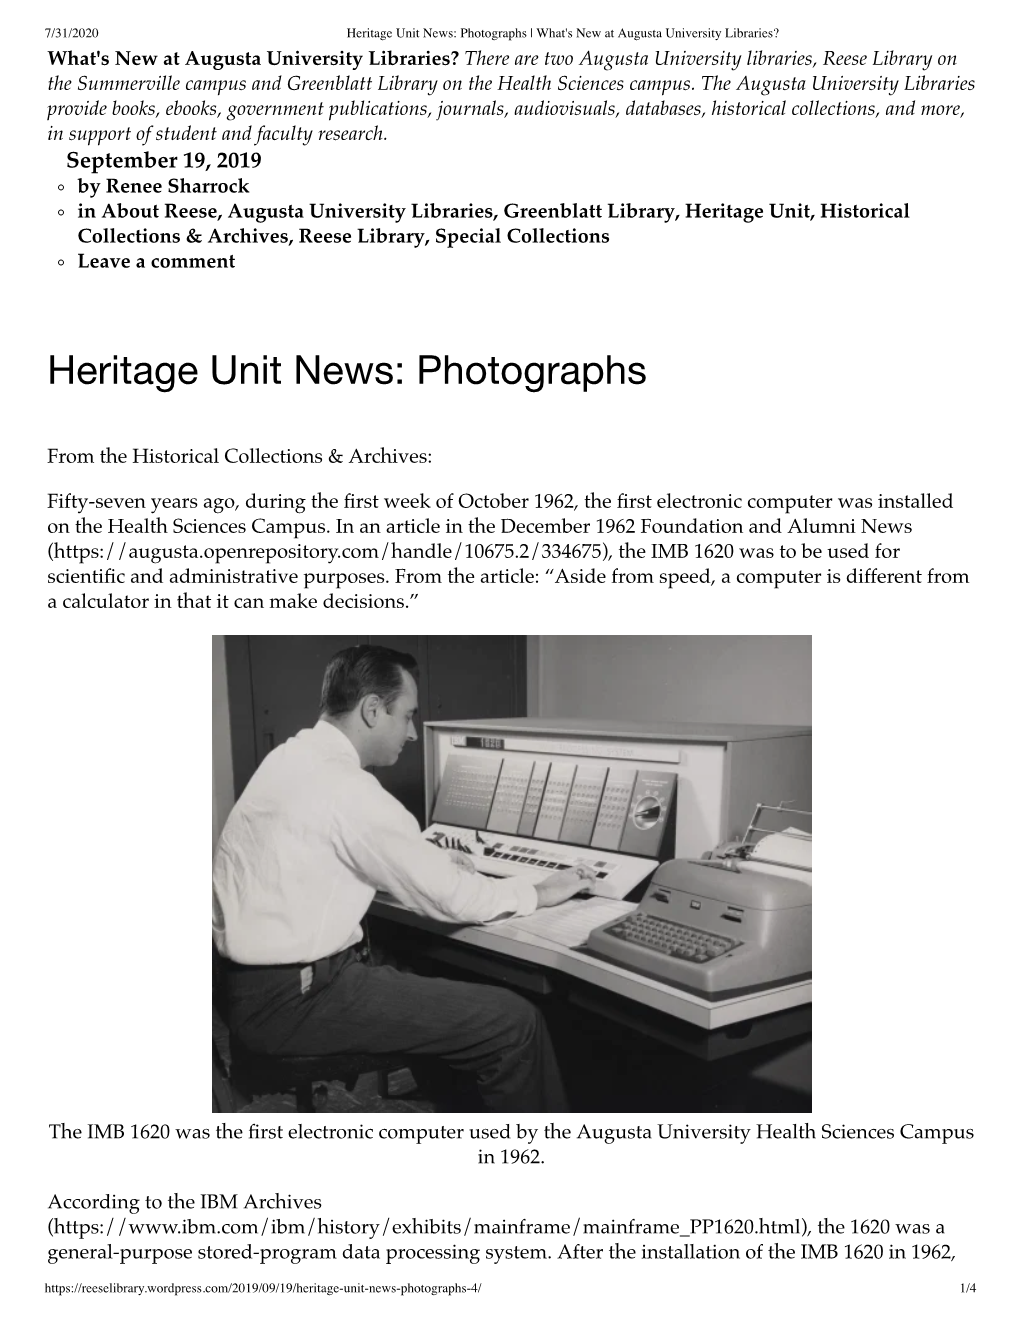 Heritage Unit News: Photographs